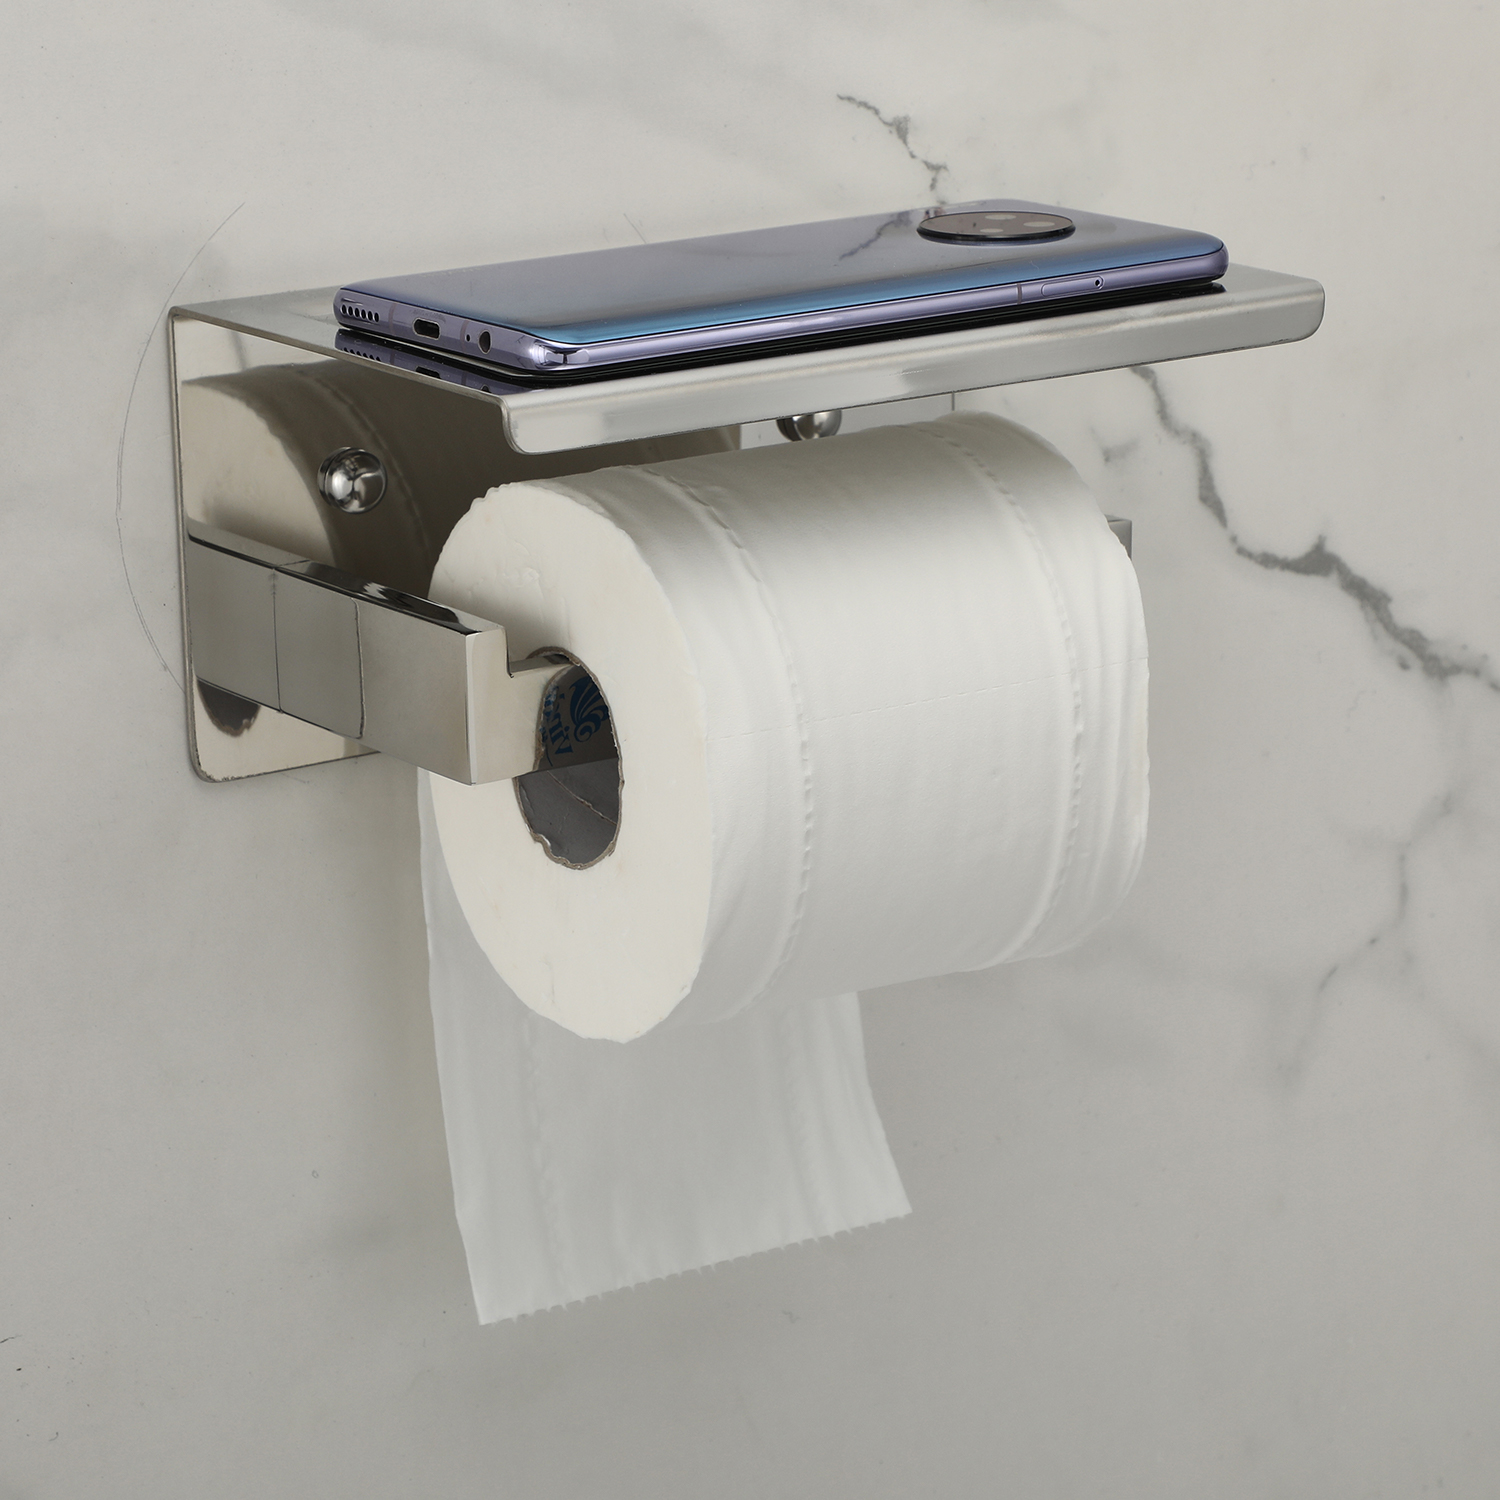 Toilettenpapierhalter aus Edelstahl